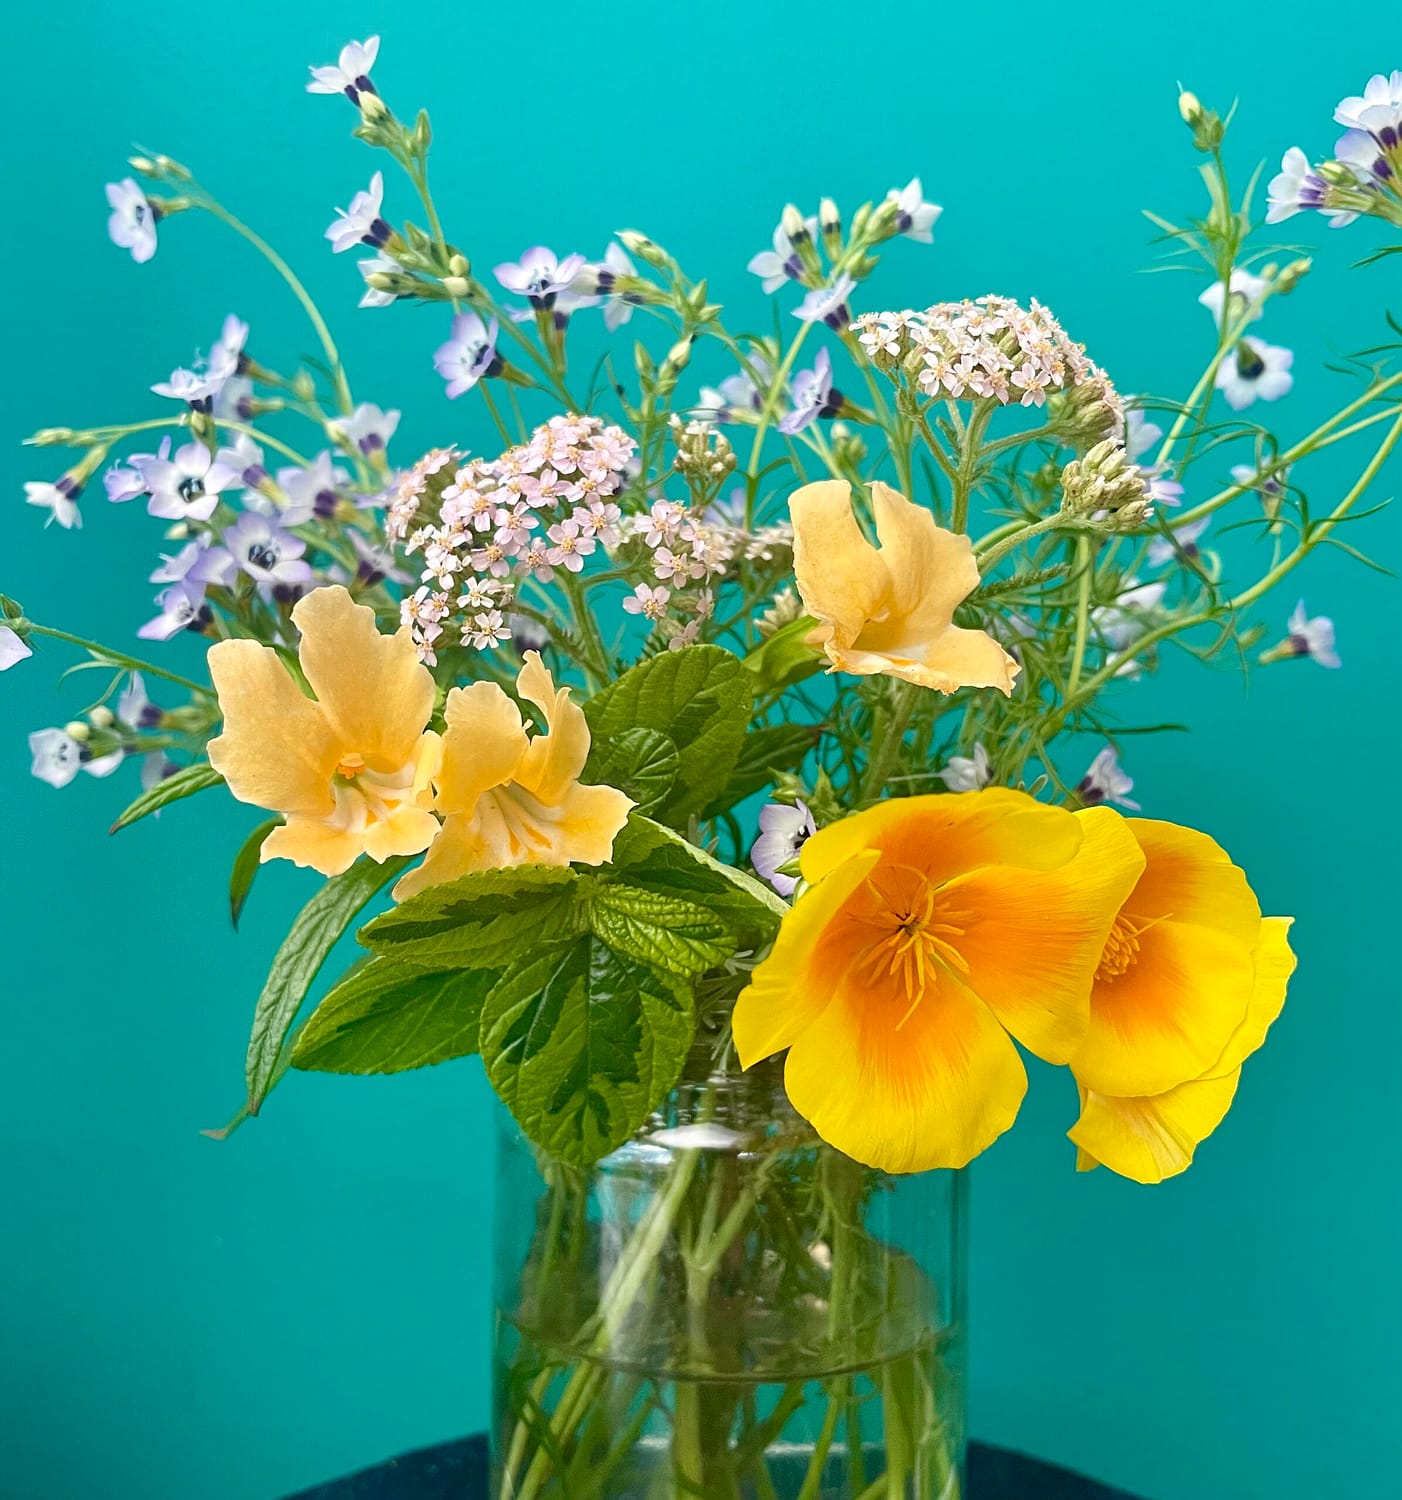 California poppy (Eschscholzia californica), bird’s-eye gilia (Gilia tricolor), yarrow (Achillea millefolium), and monkeyflower ‘Pamela’ (Mimulus)